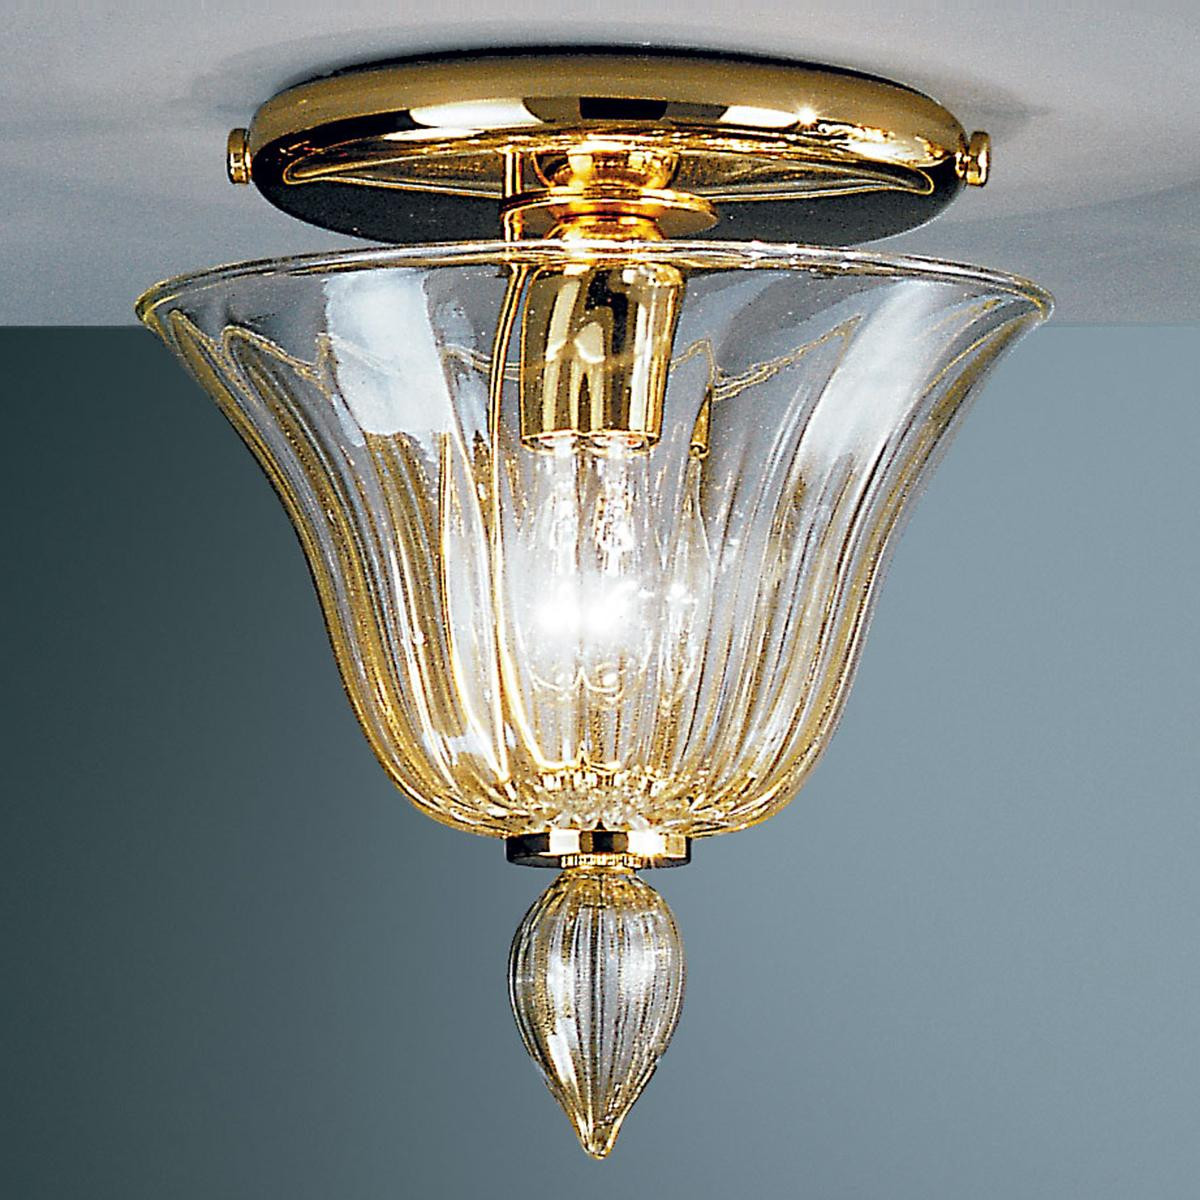 "Barbara" Murano glass ceiling light - transparent and gold